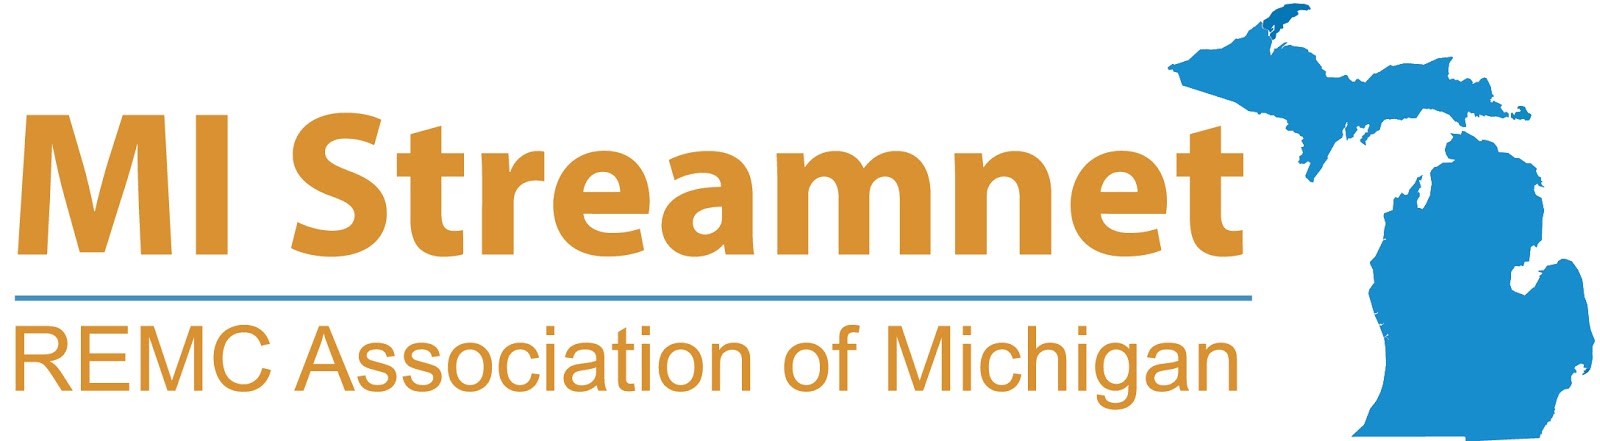 Michigan Streamnet Logo